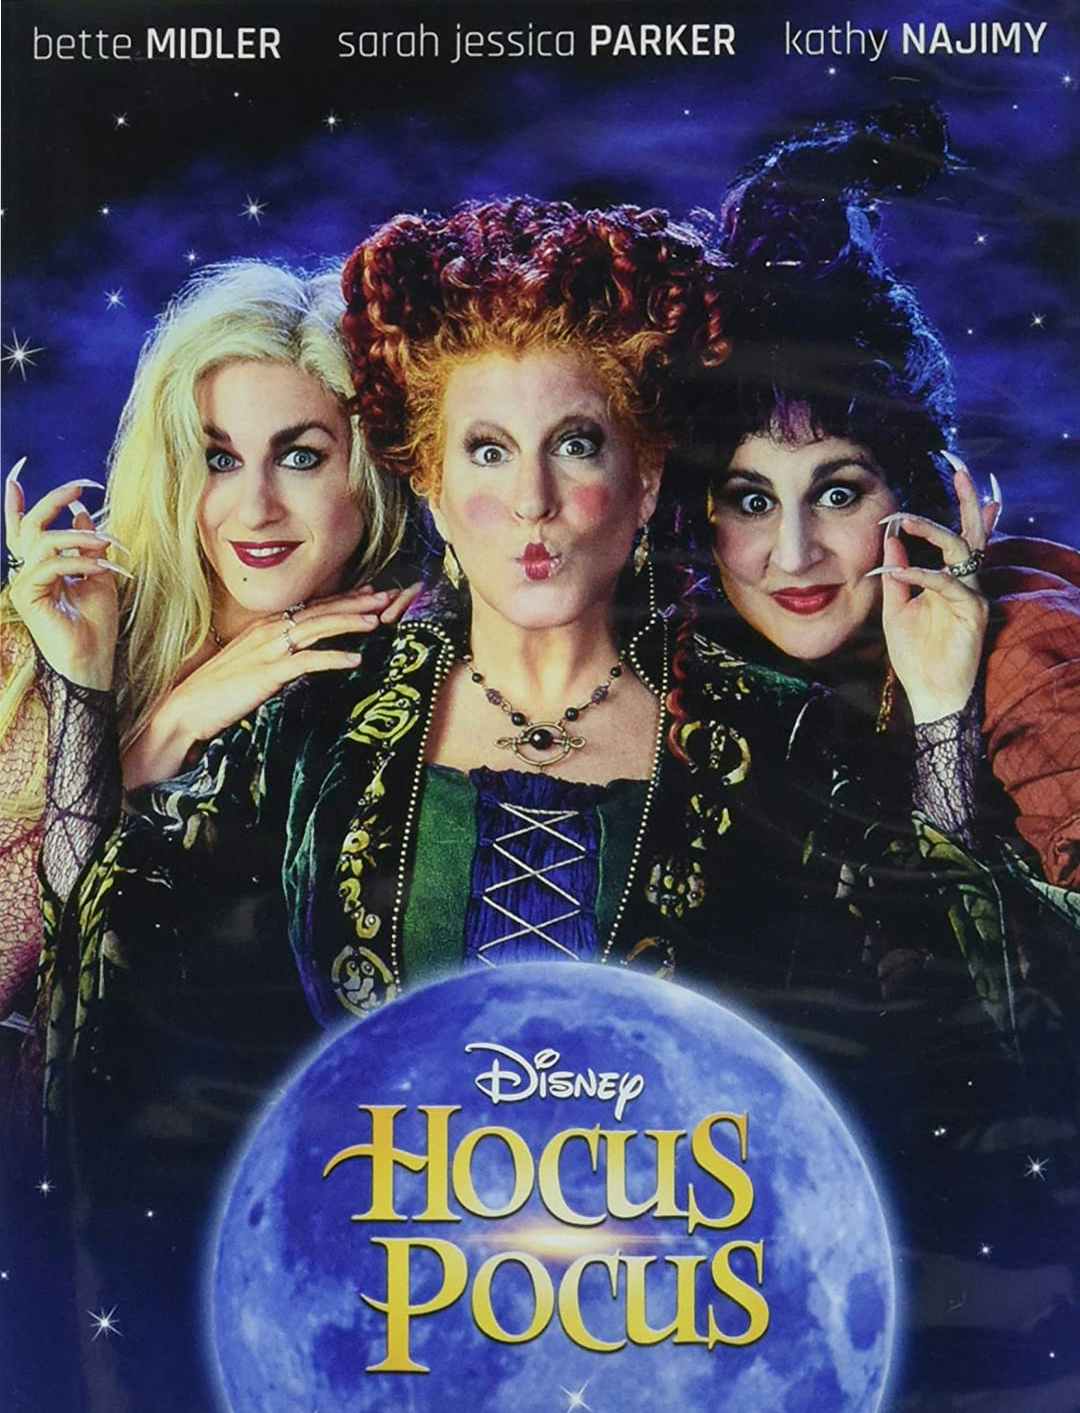 Disney Original Movie Hocus Pocus DVD cover